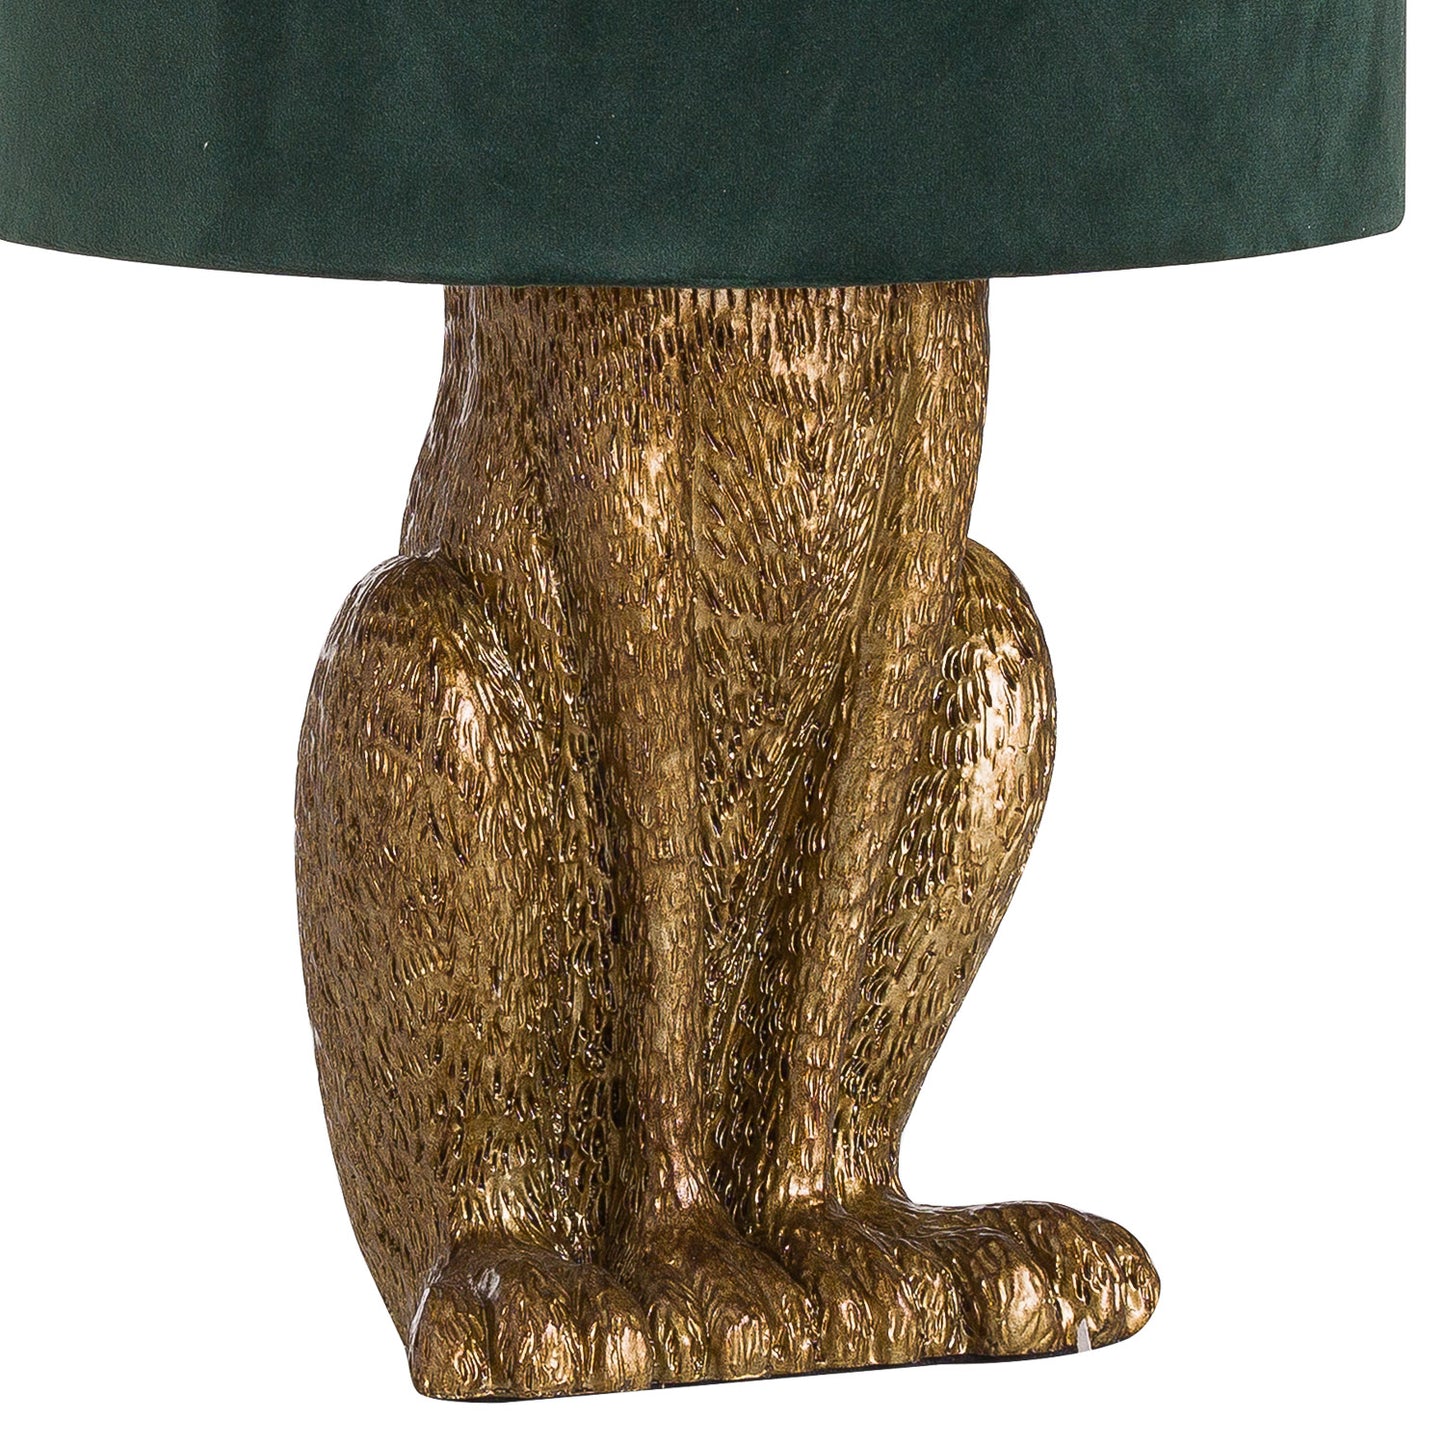 Gold Hiding Rabbit Lamp